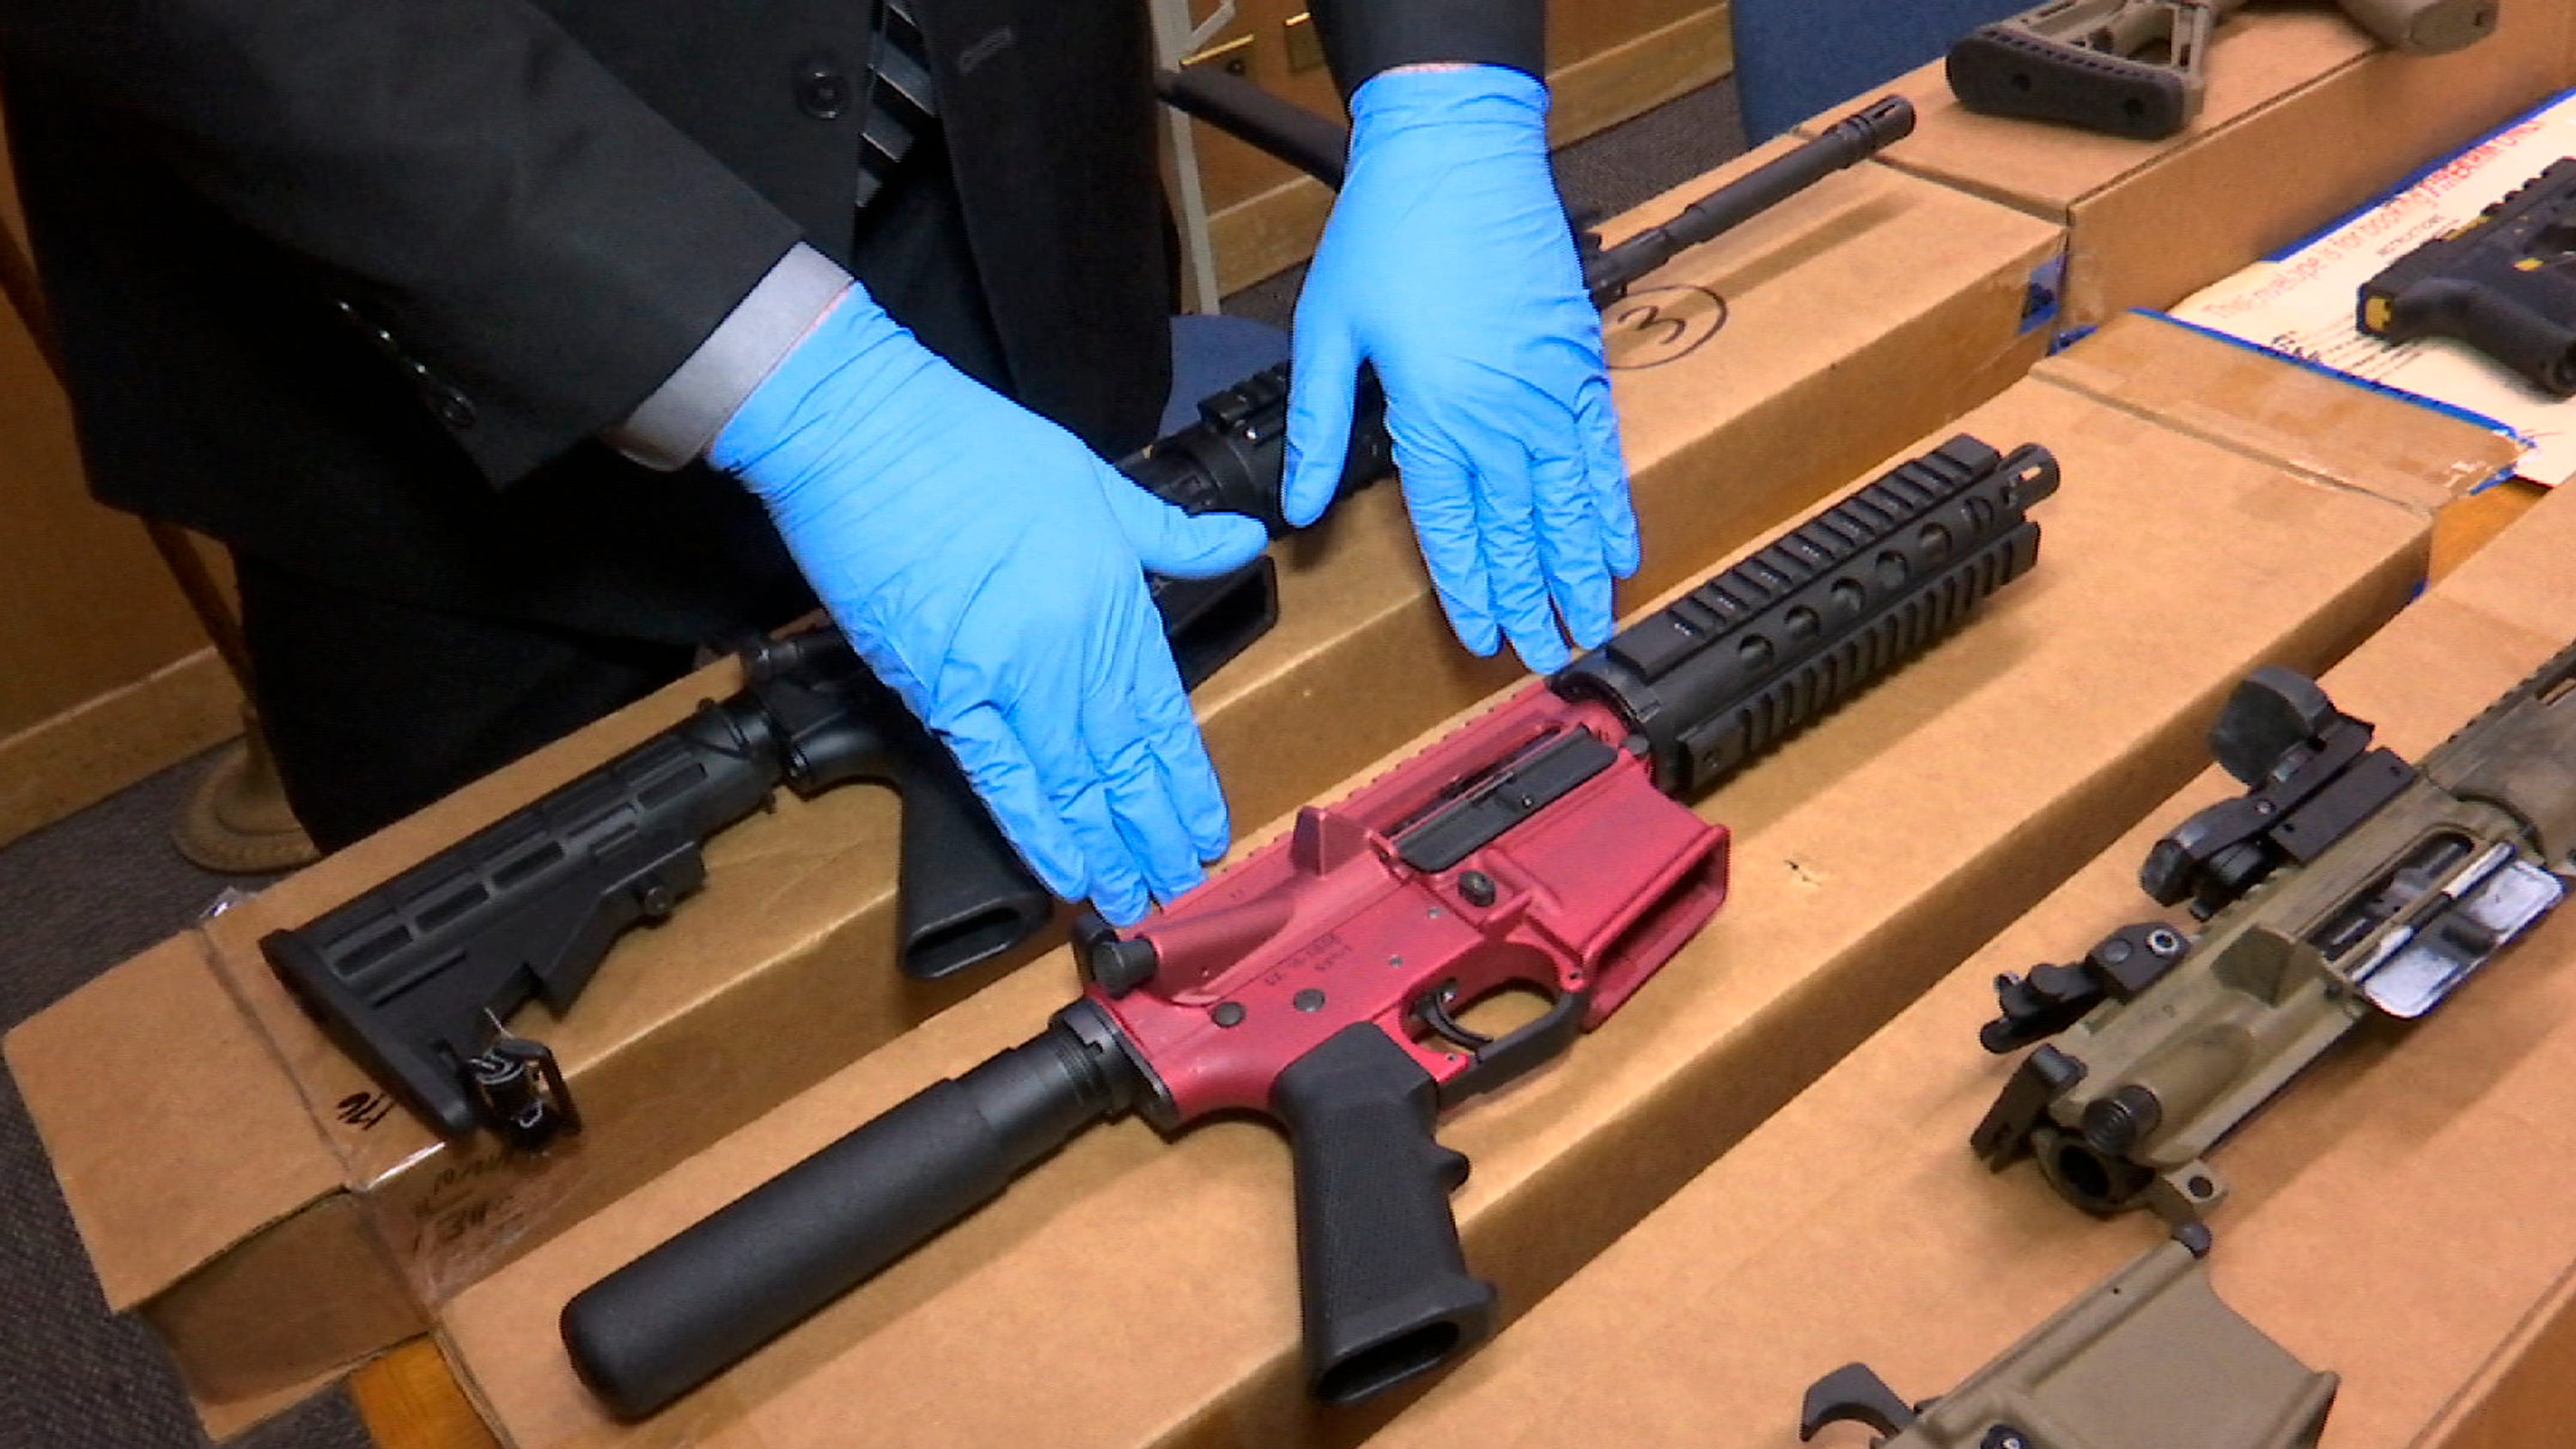 Democratic Legislators This Year Aim To Outlaw Firearm Assembly Kits